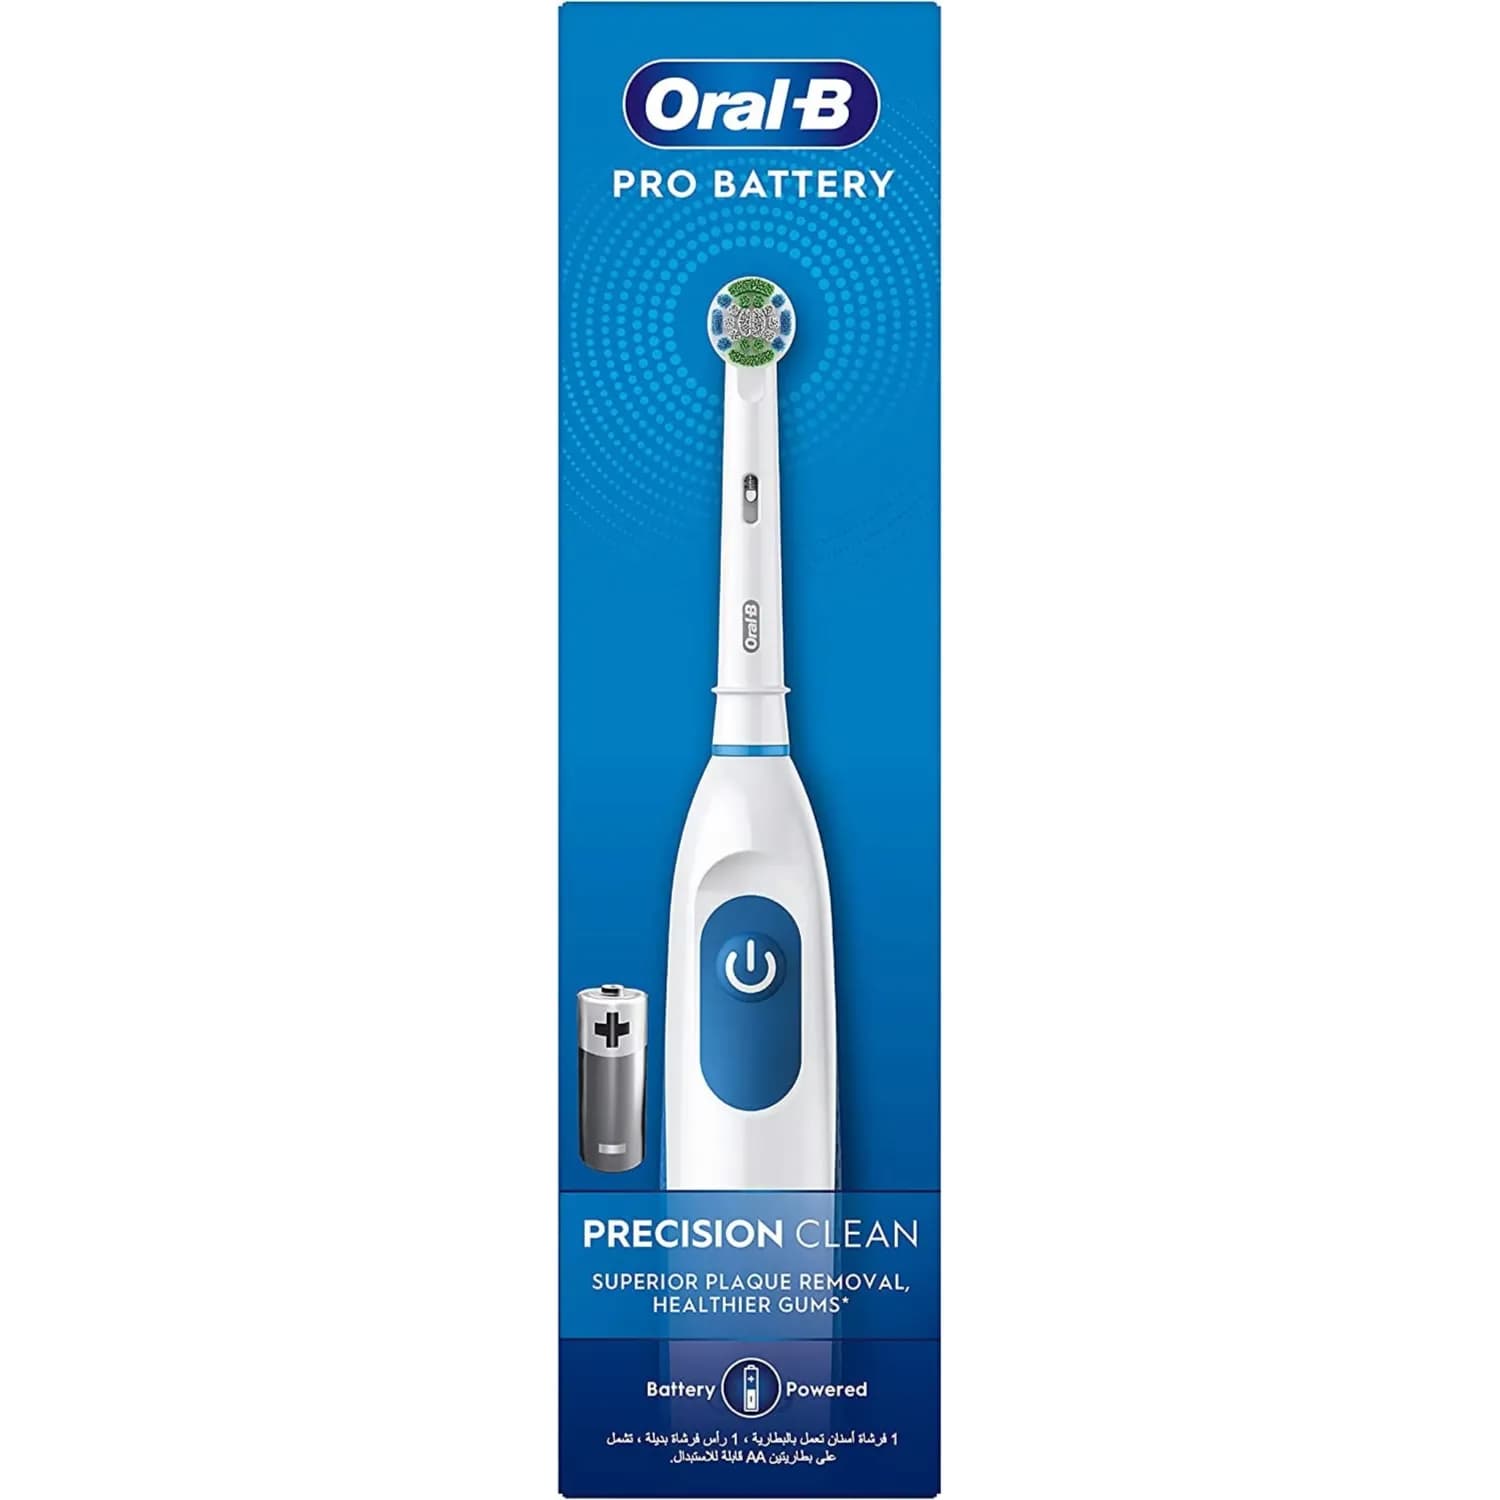 Oral B Pro Battery Precision Clean